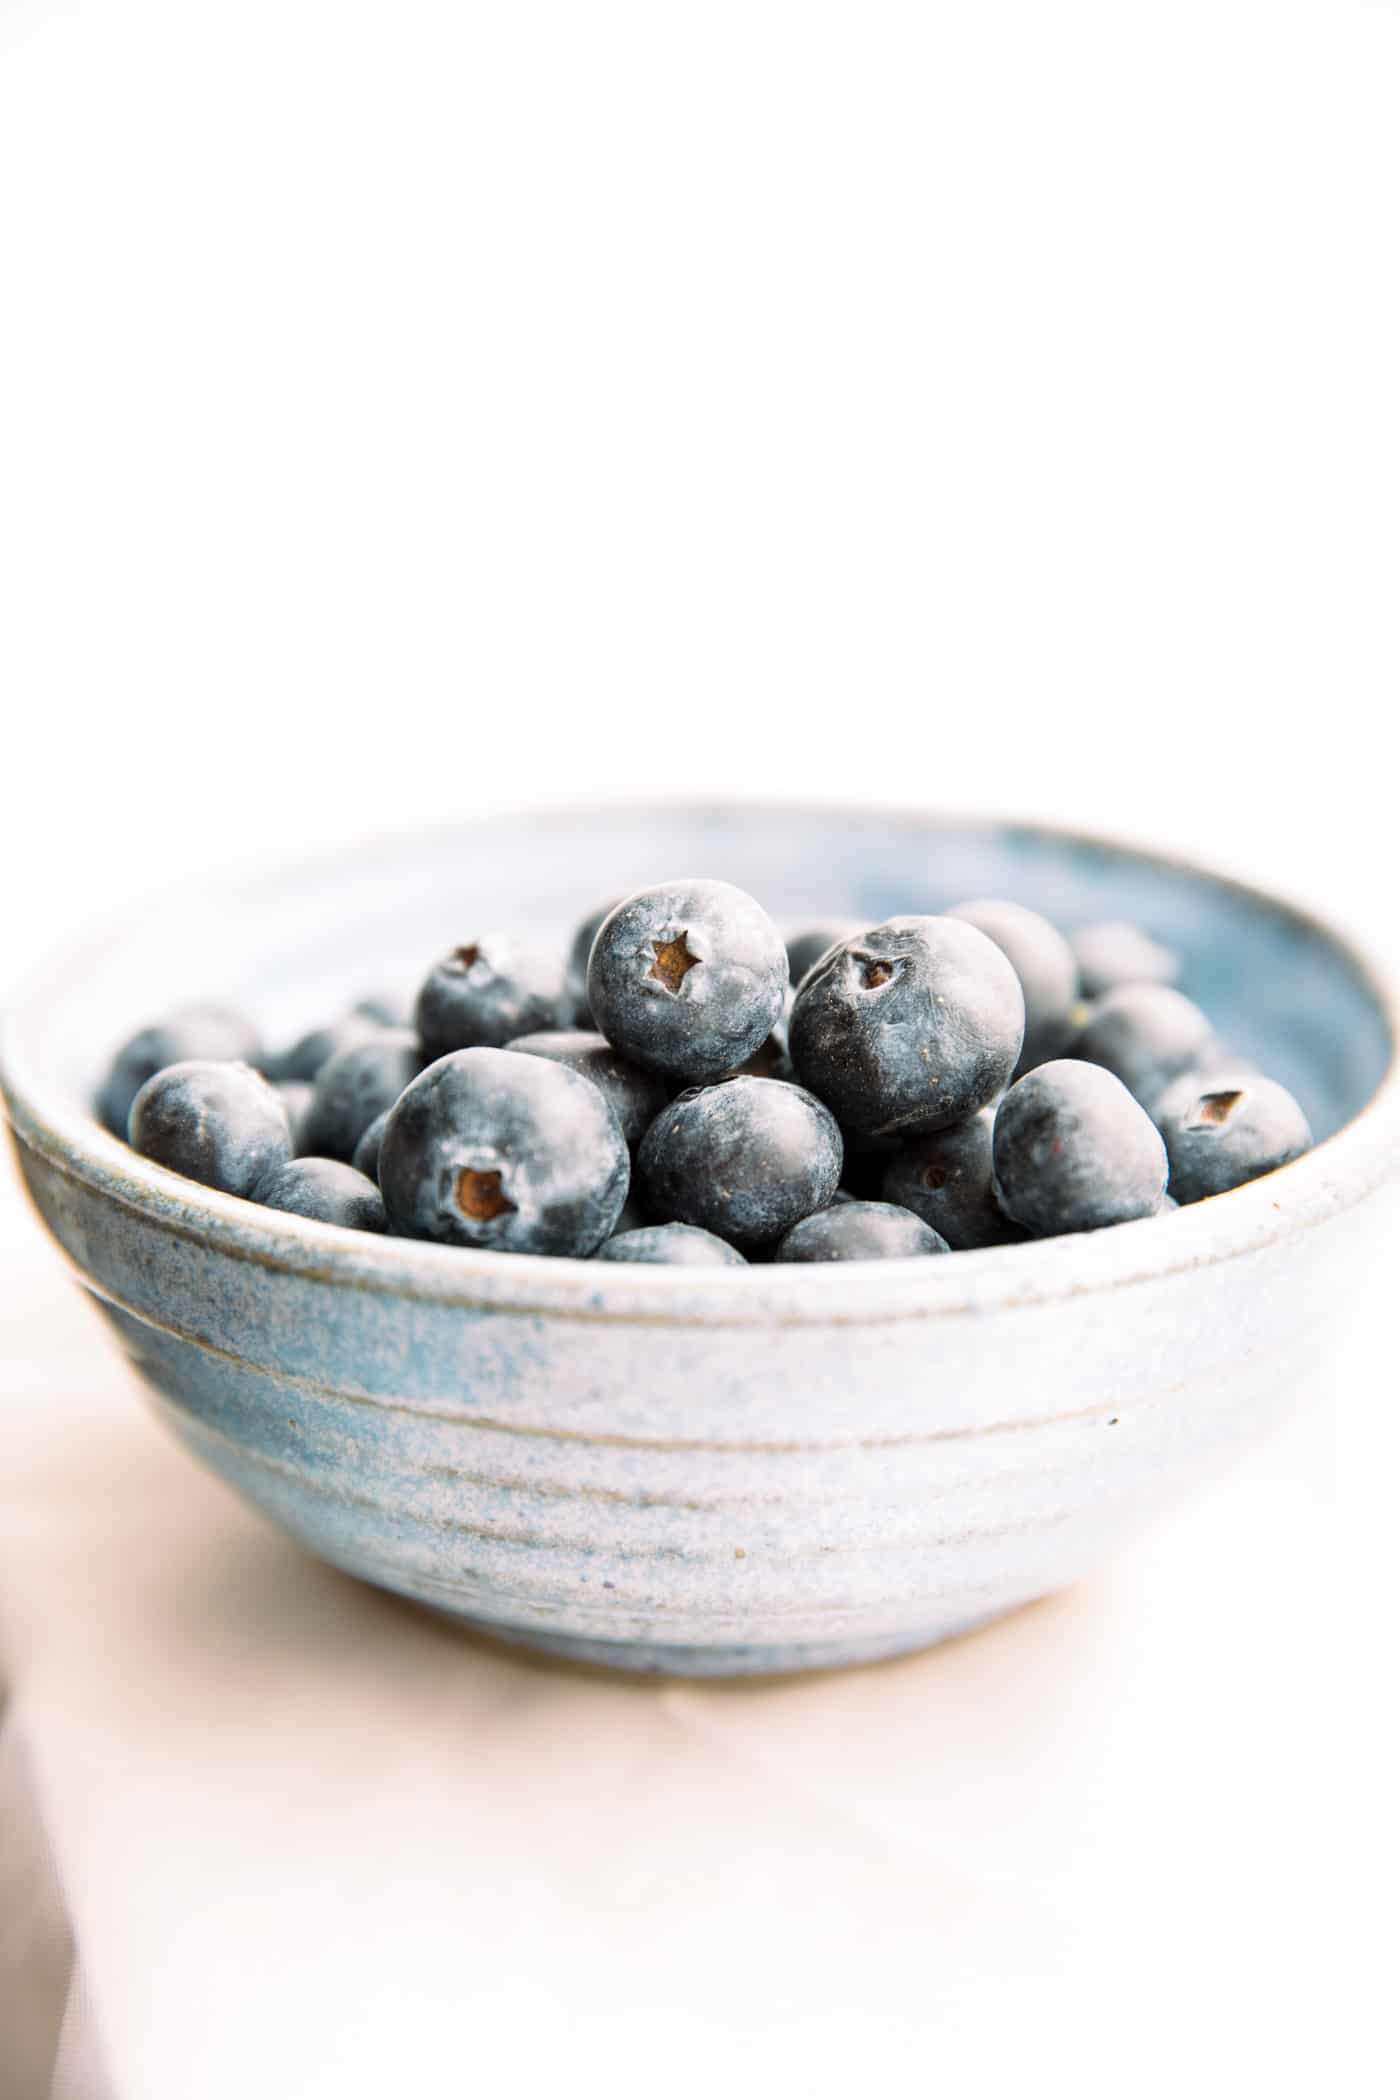 Fresh blueberries in stone bowl.